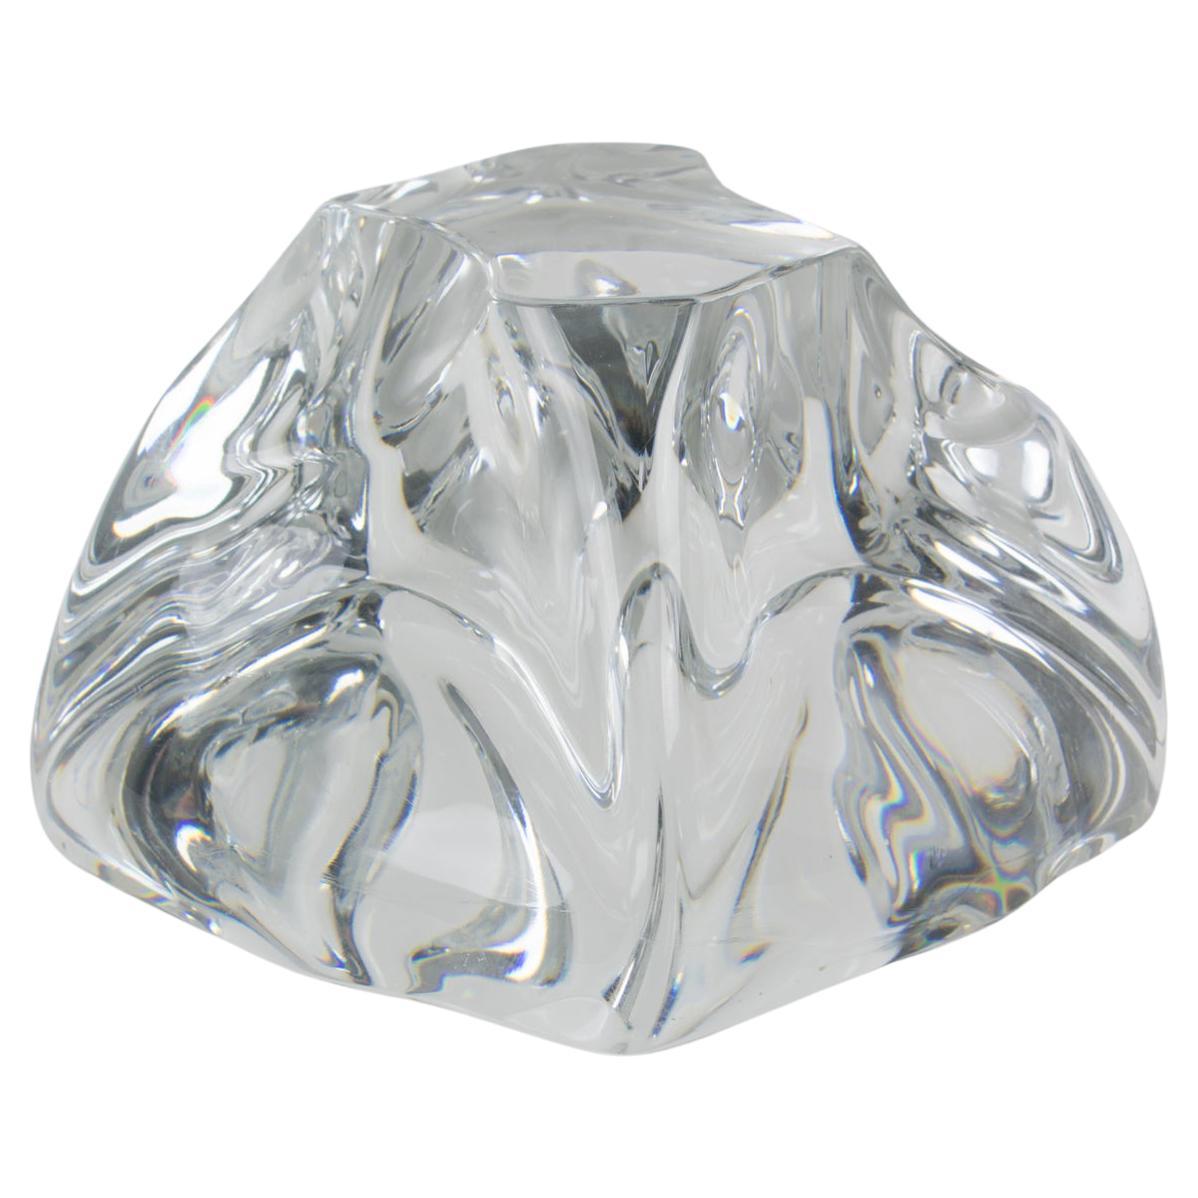 Daum France Crystal Paperweight Sculpture